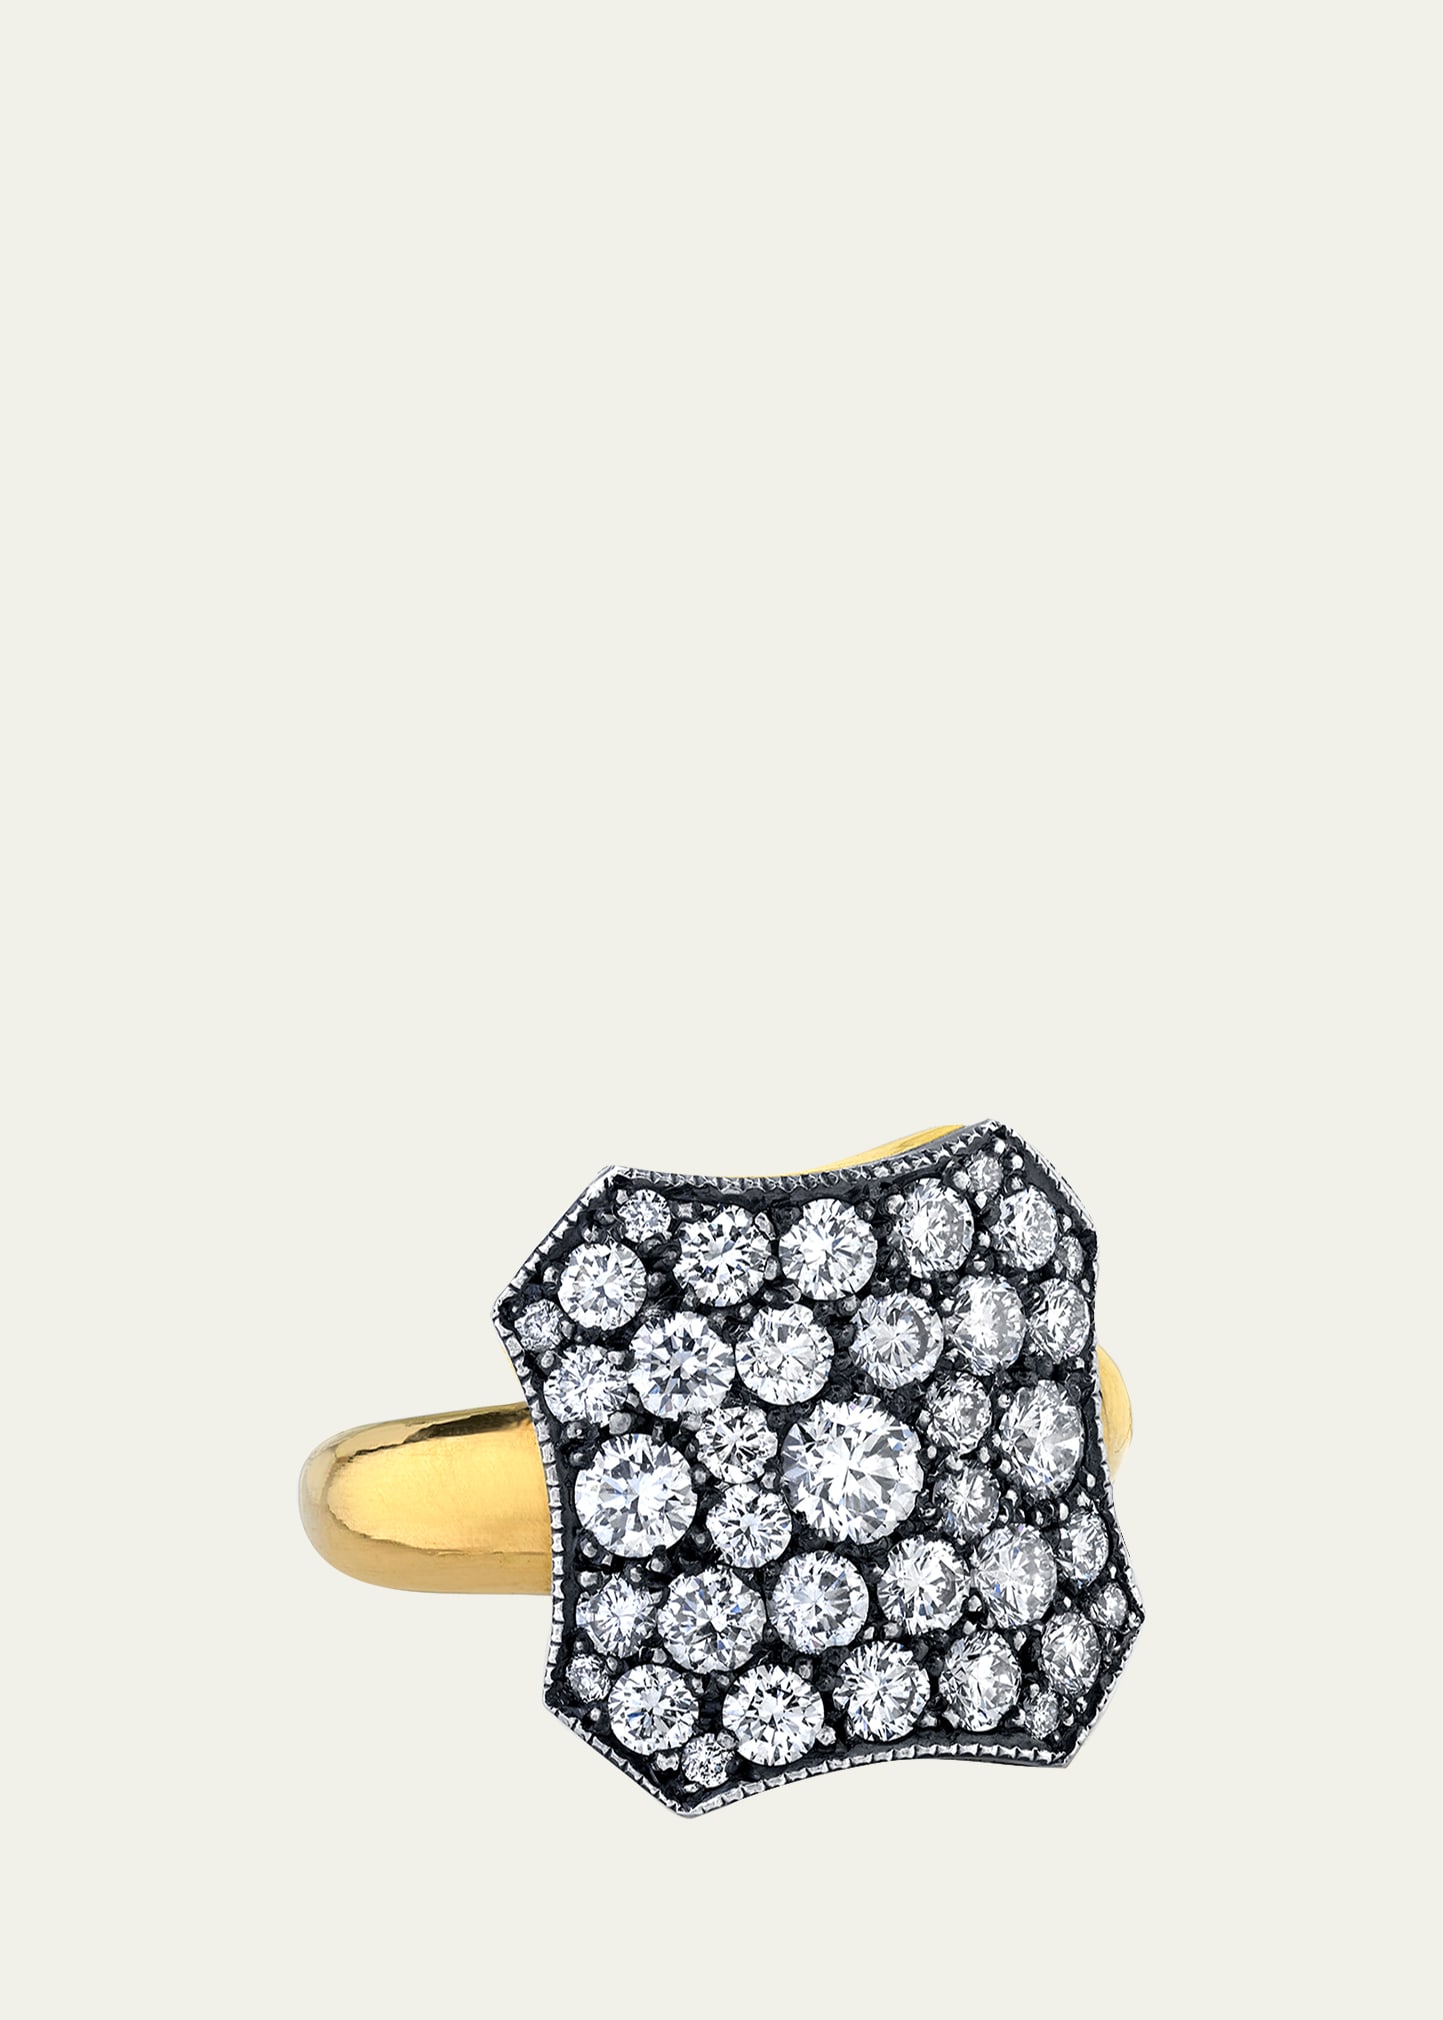 Arman Sarkisyan Diamond Cobblestone Ring, Size 6